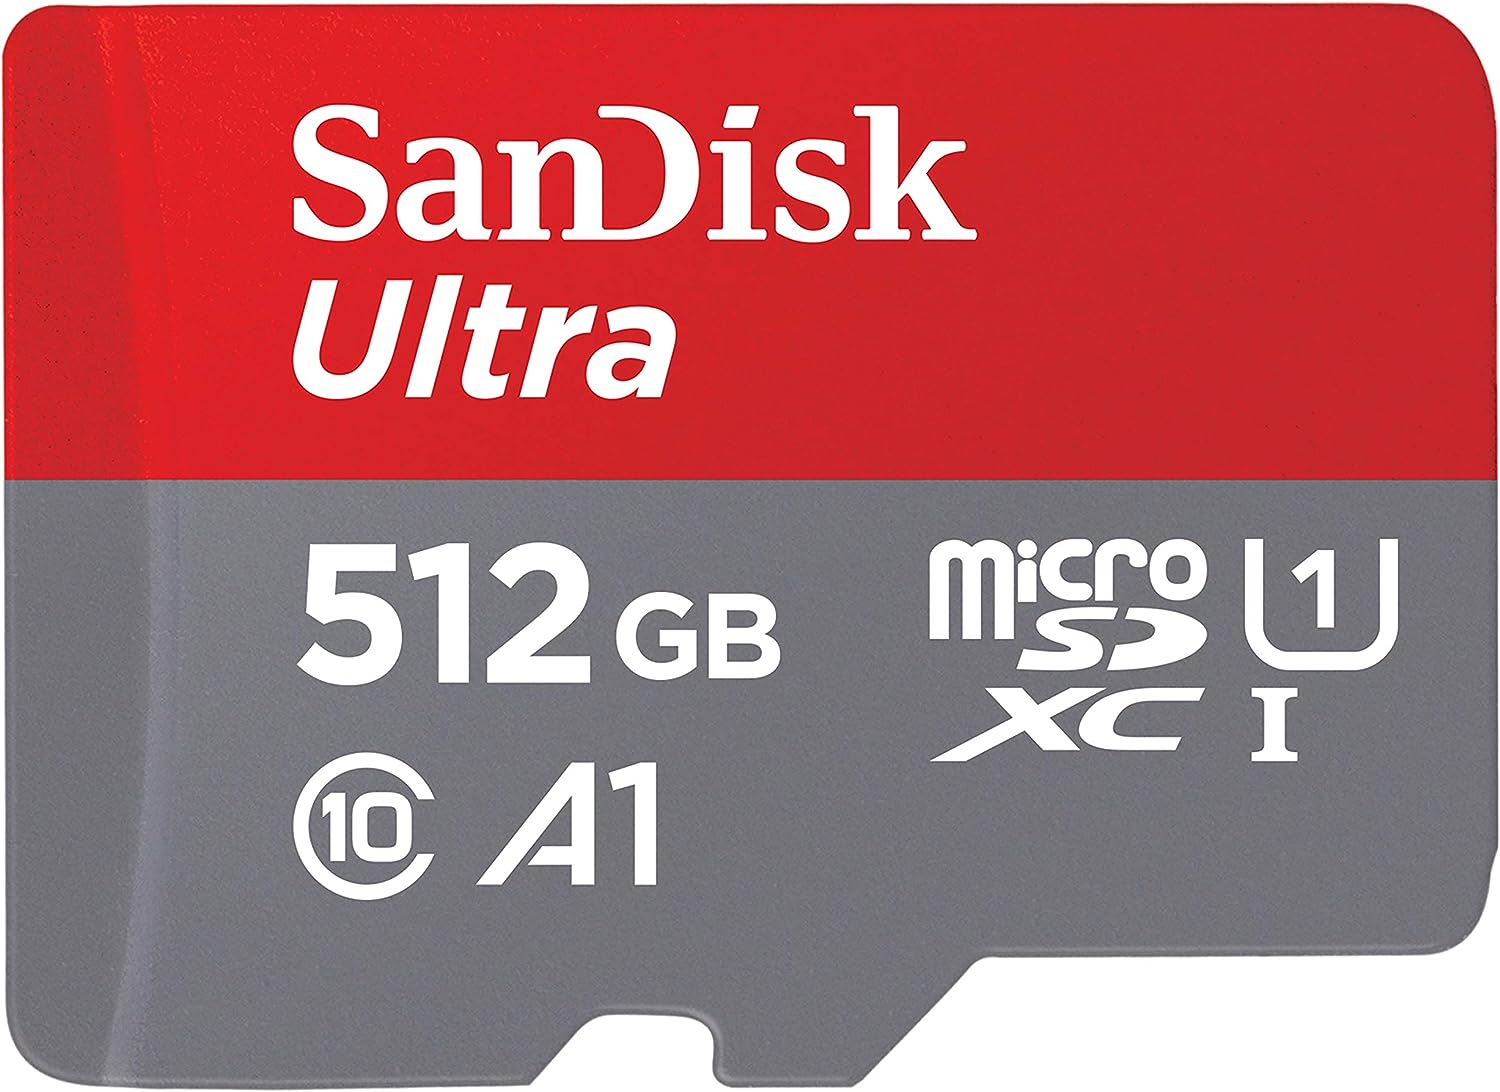 SanDisk Ultra UHS MicroSD Card 512GB